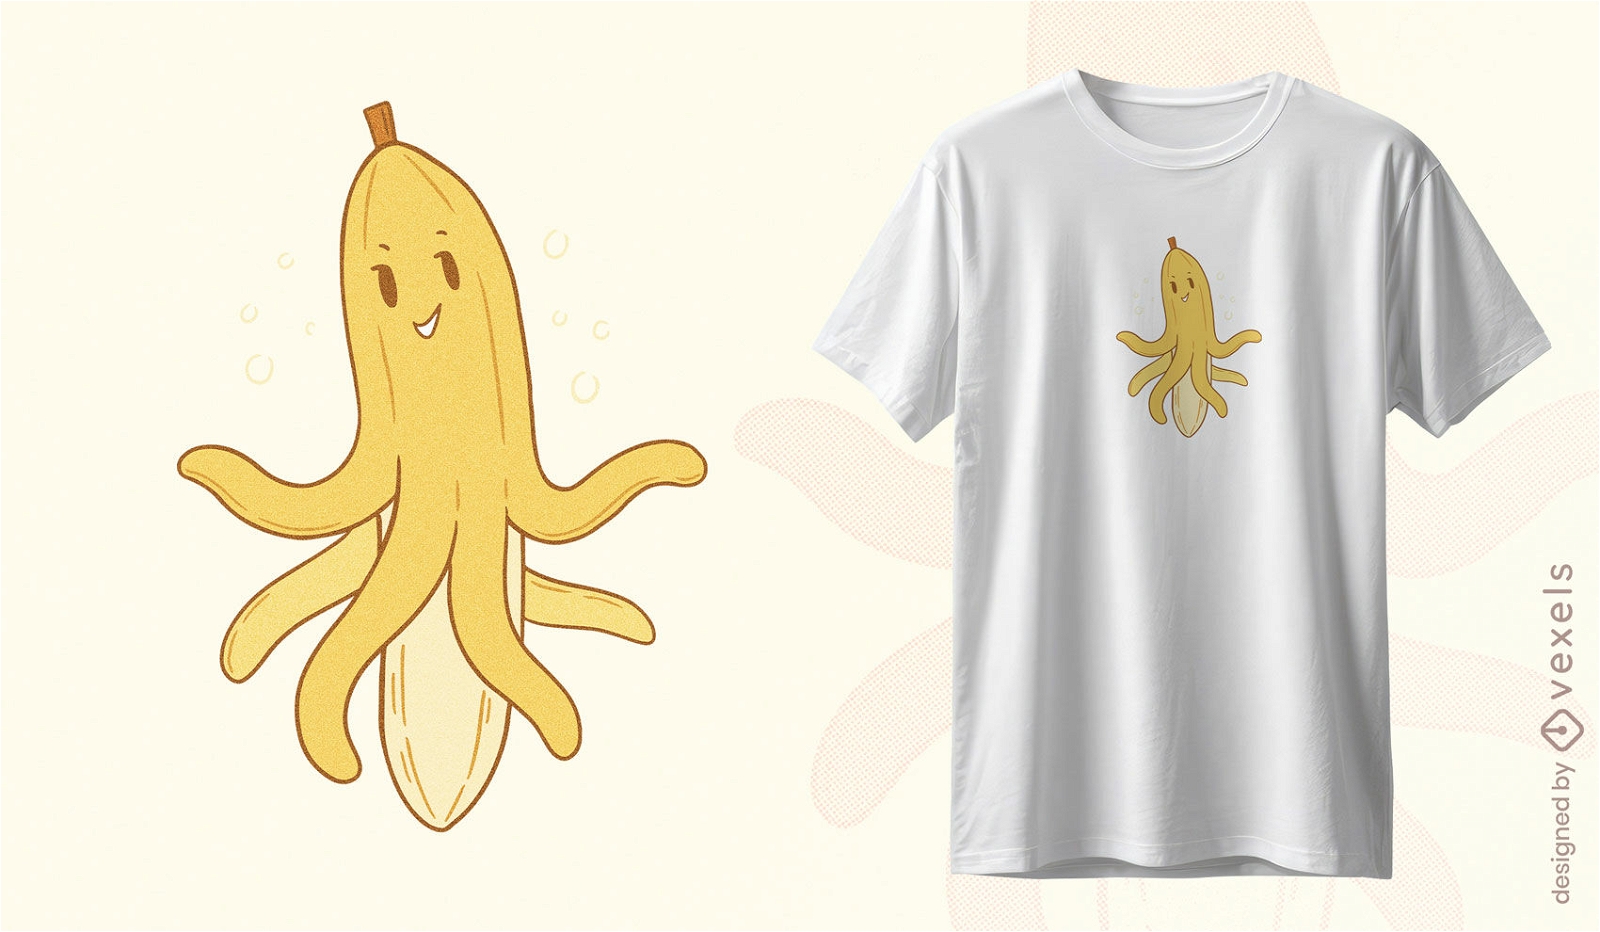 Fröhliches T-Shirt-Design mit Bananencharakter